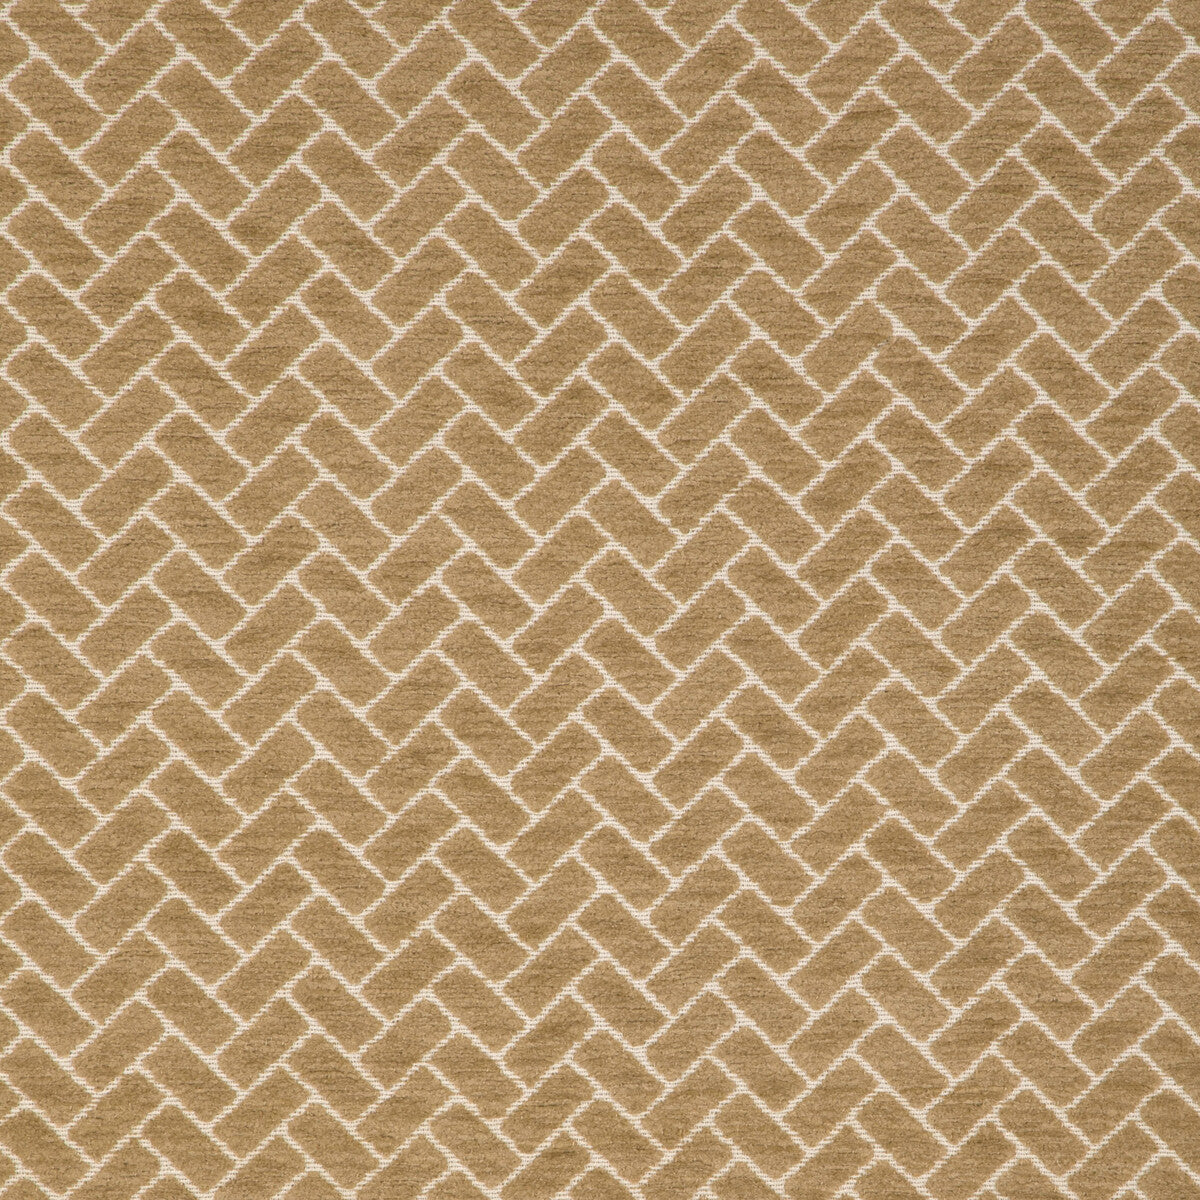 Kravet Smart fabric in 37003-4 color - pattern 37003.4.0 - by Kravet Smart in the Pavilion collection